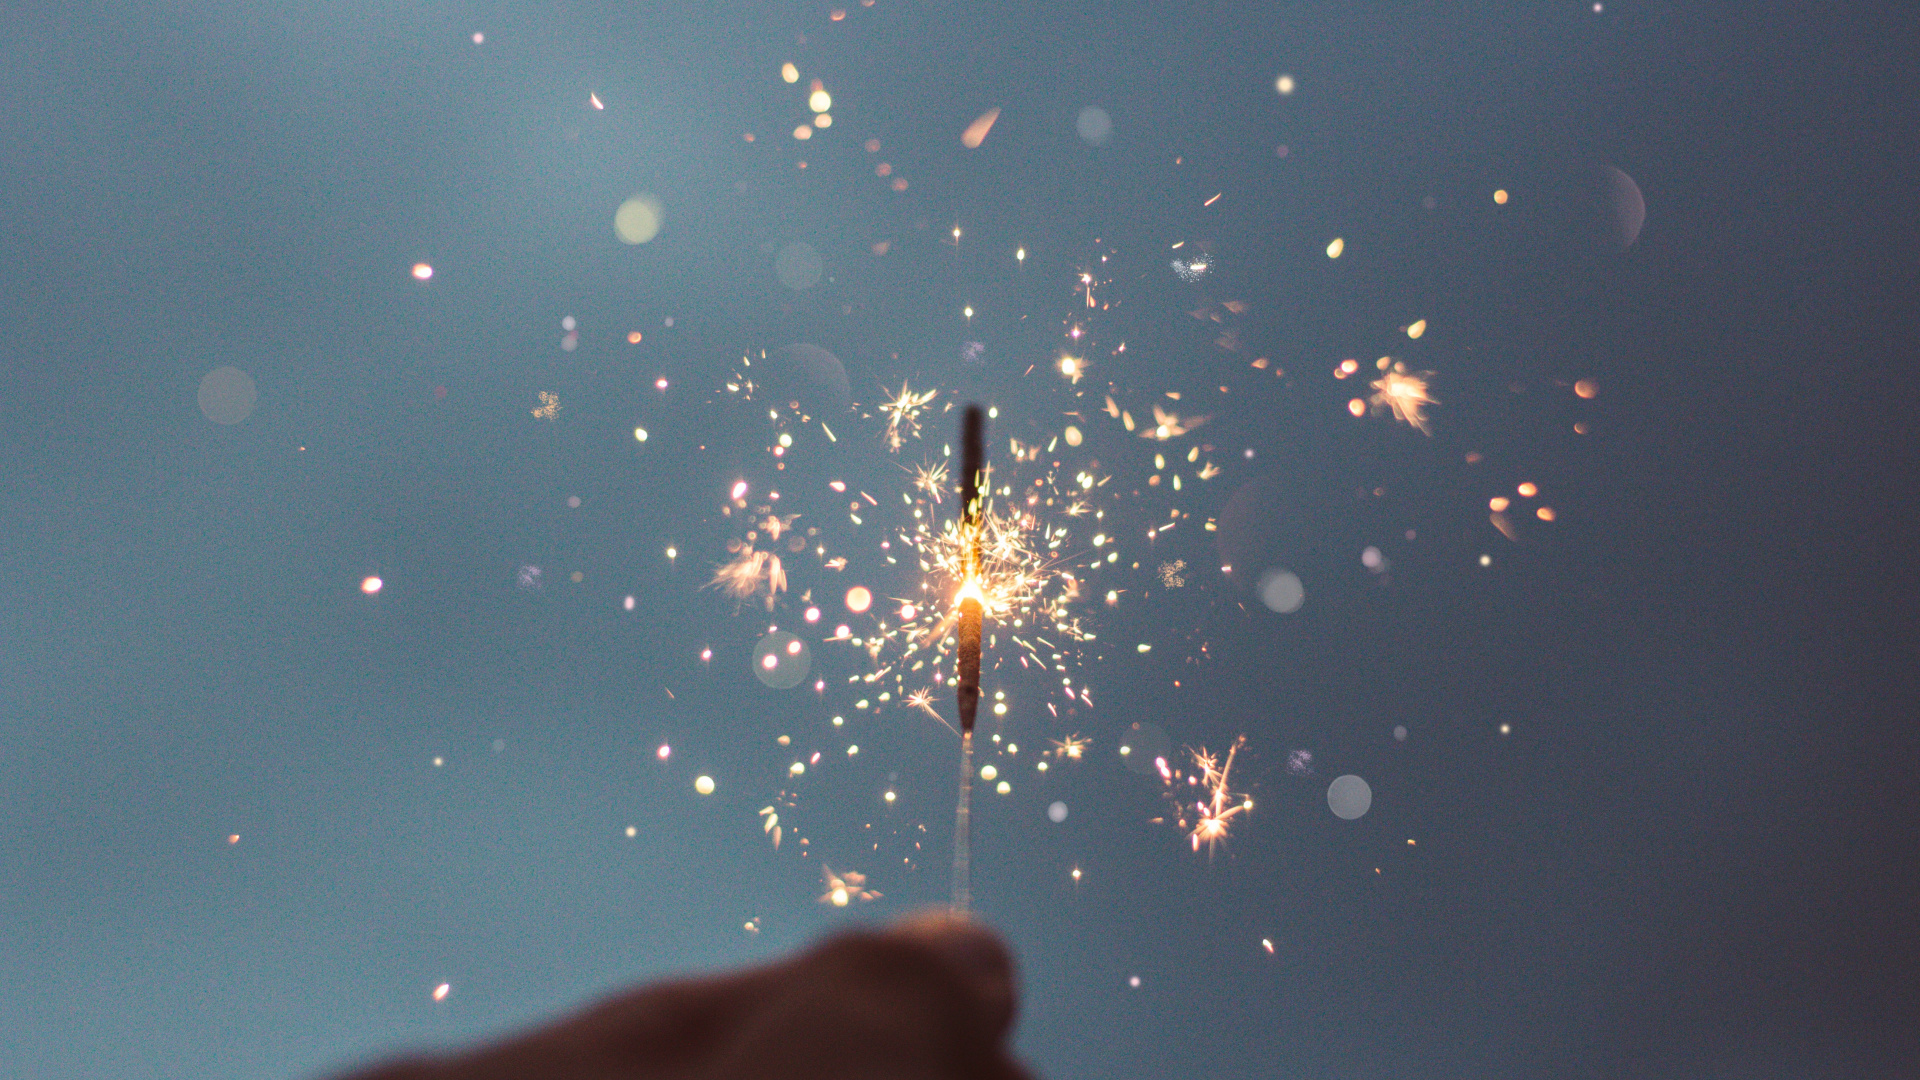 New Year, Water, Sparkler, Fireworks, Hand. Wallpaper in 1920x1080 Resolution